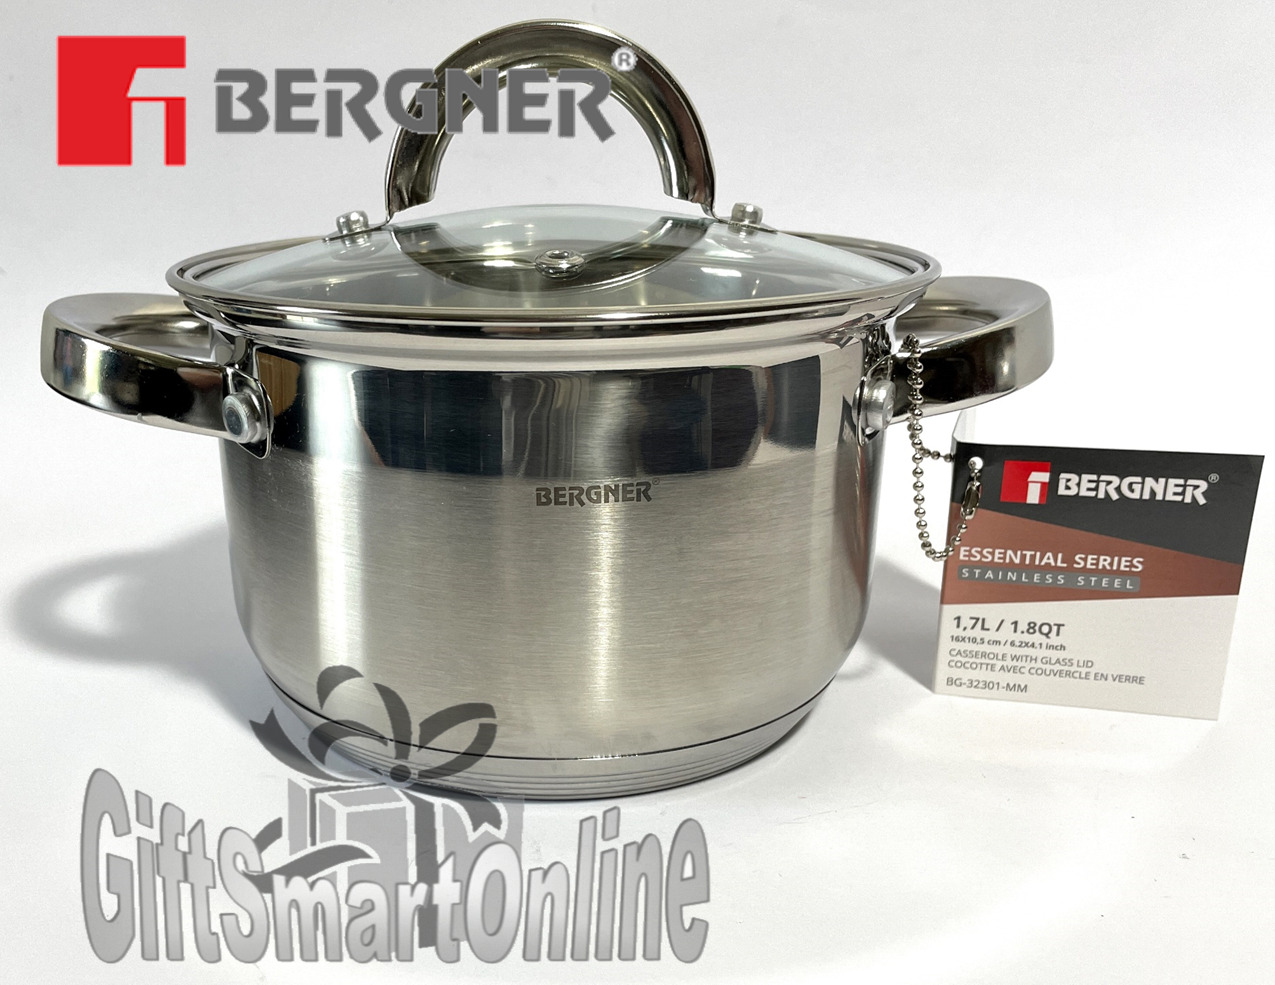 Bergner 3.7qt Essential Series Stainless Steel Casserole Pot Glass Lid Oven Safe